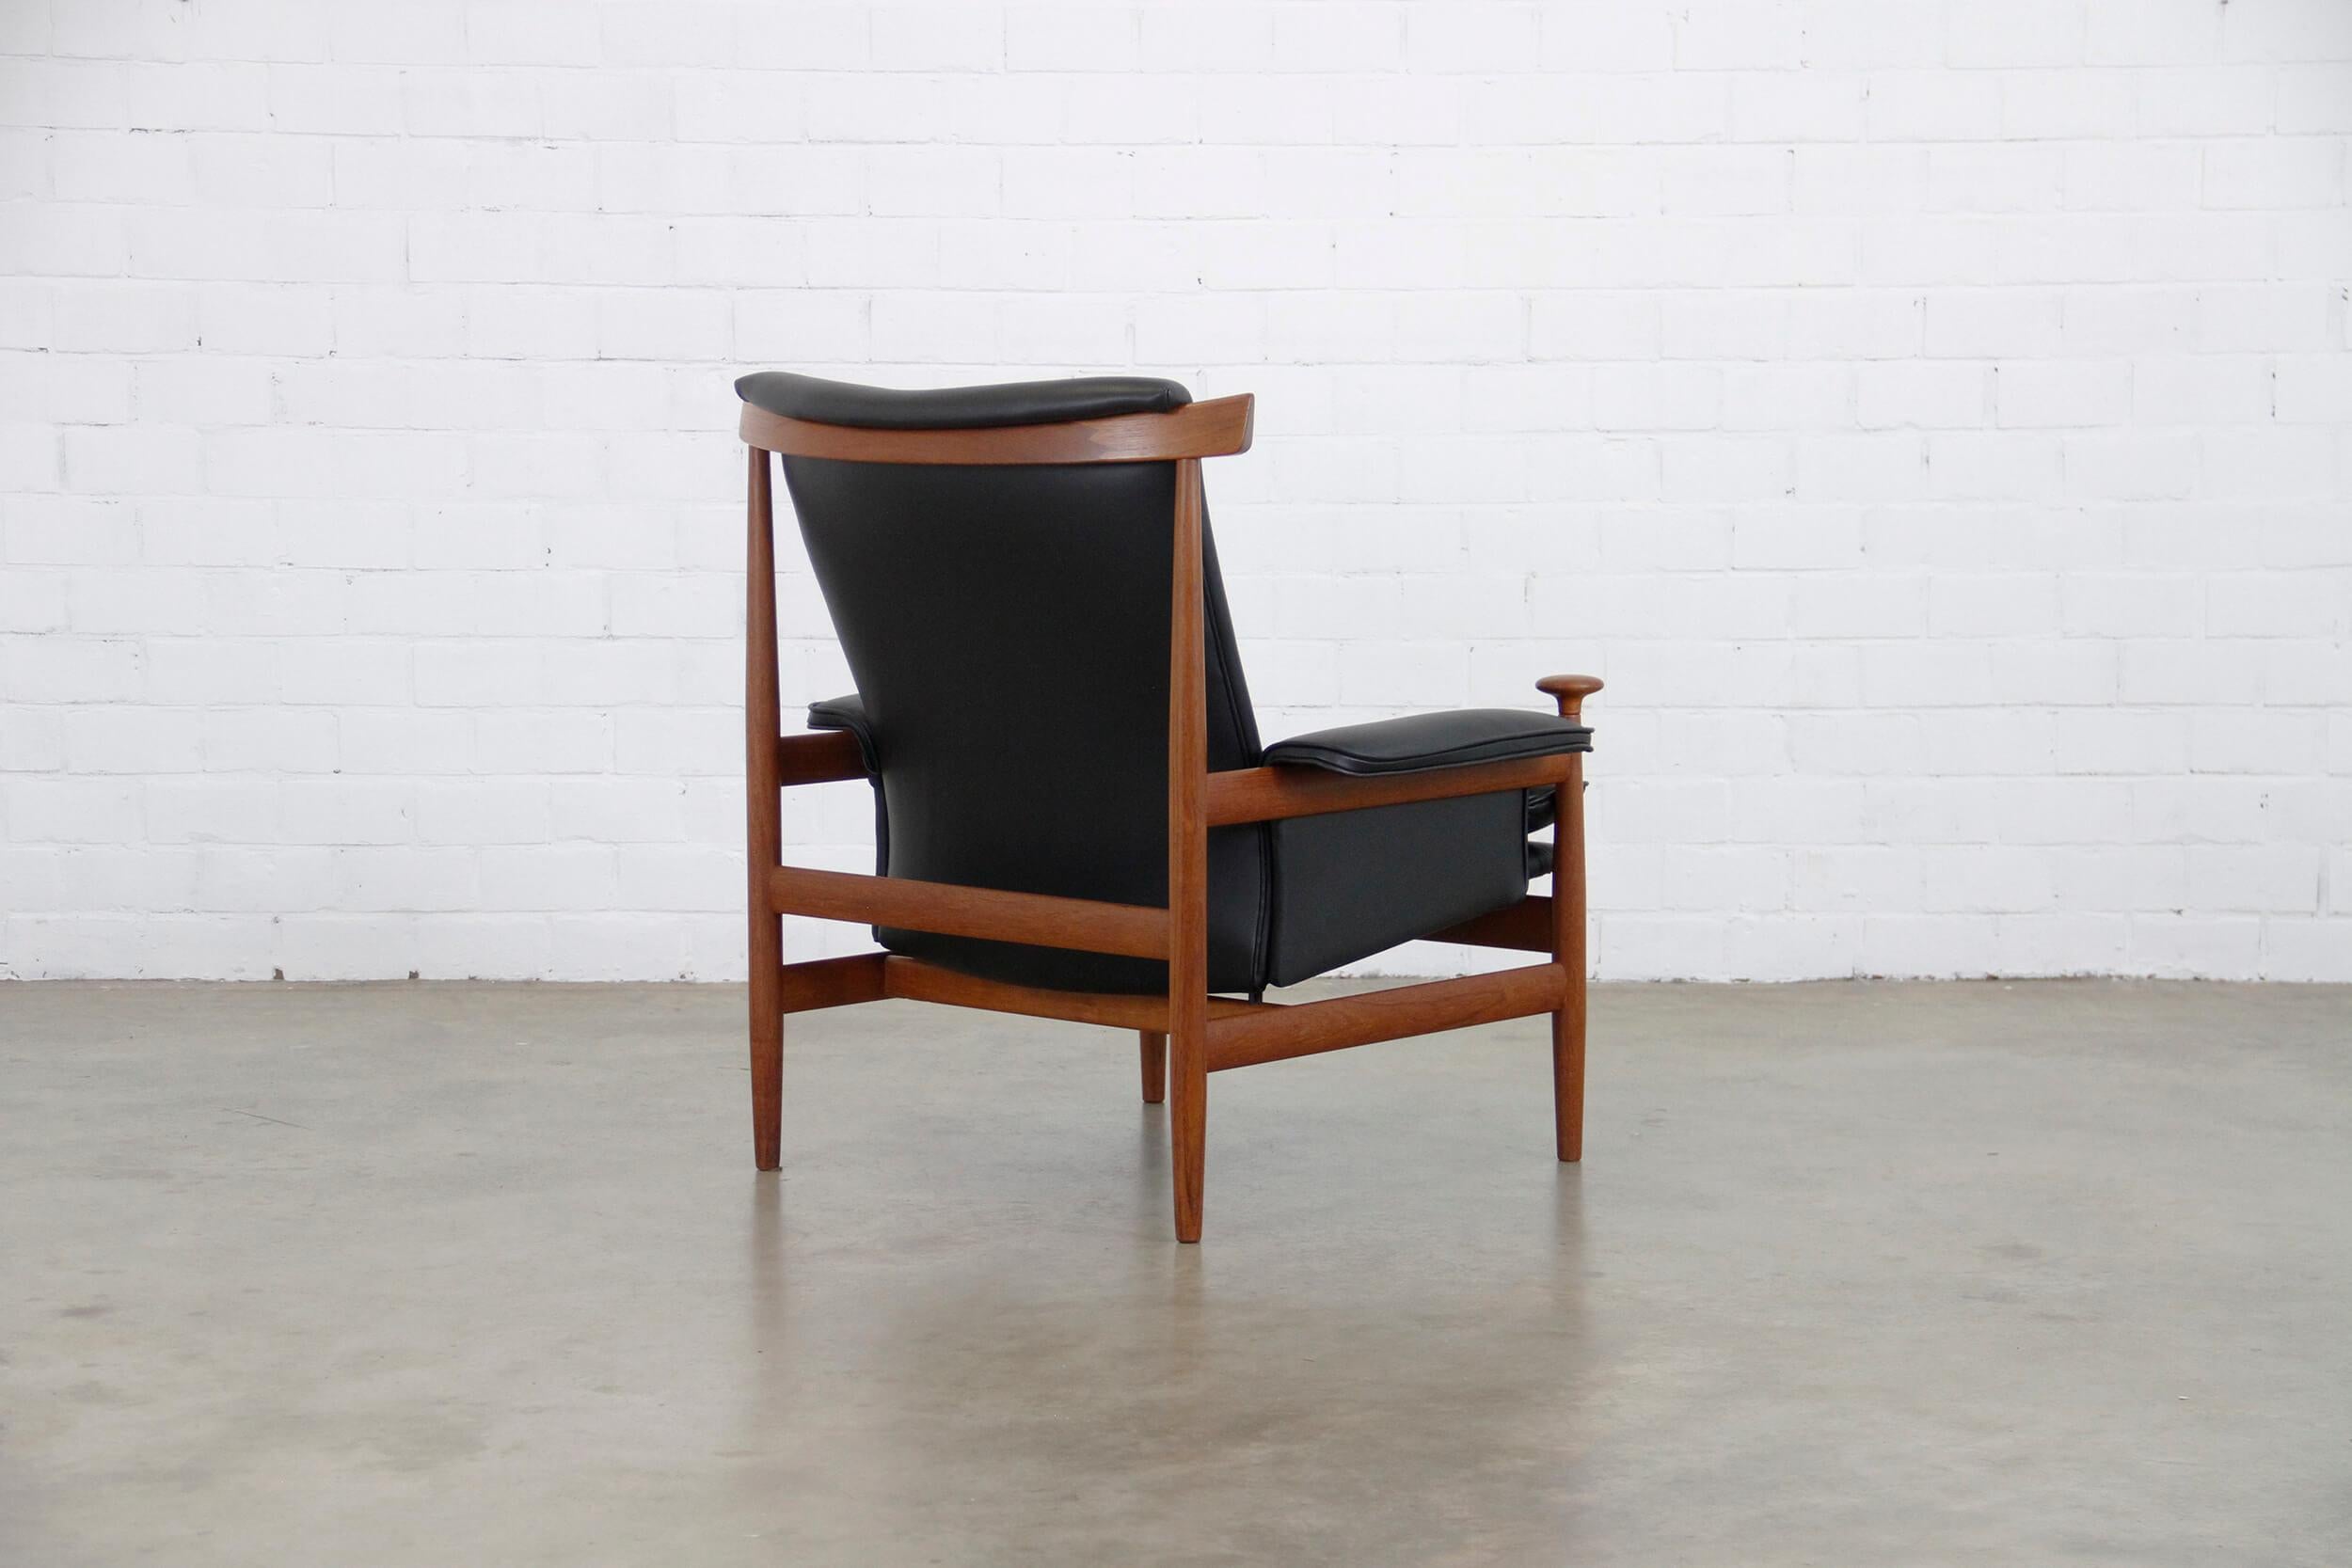 Mid-Century Modern Danish Leather and Teak Bwana Model 152 Chair by Finn Juhl for France & Søn 1962 For Sale